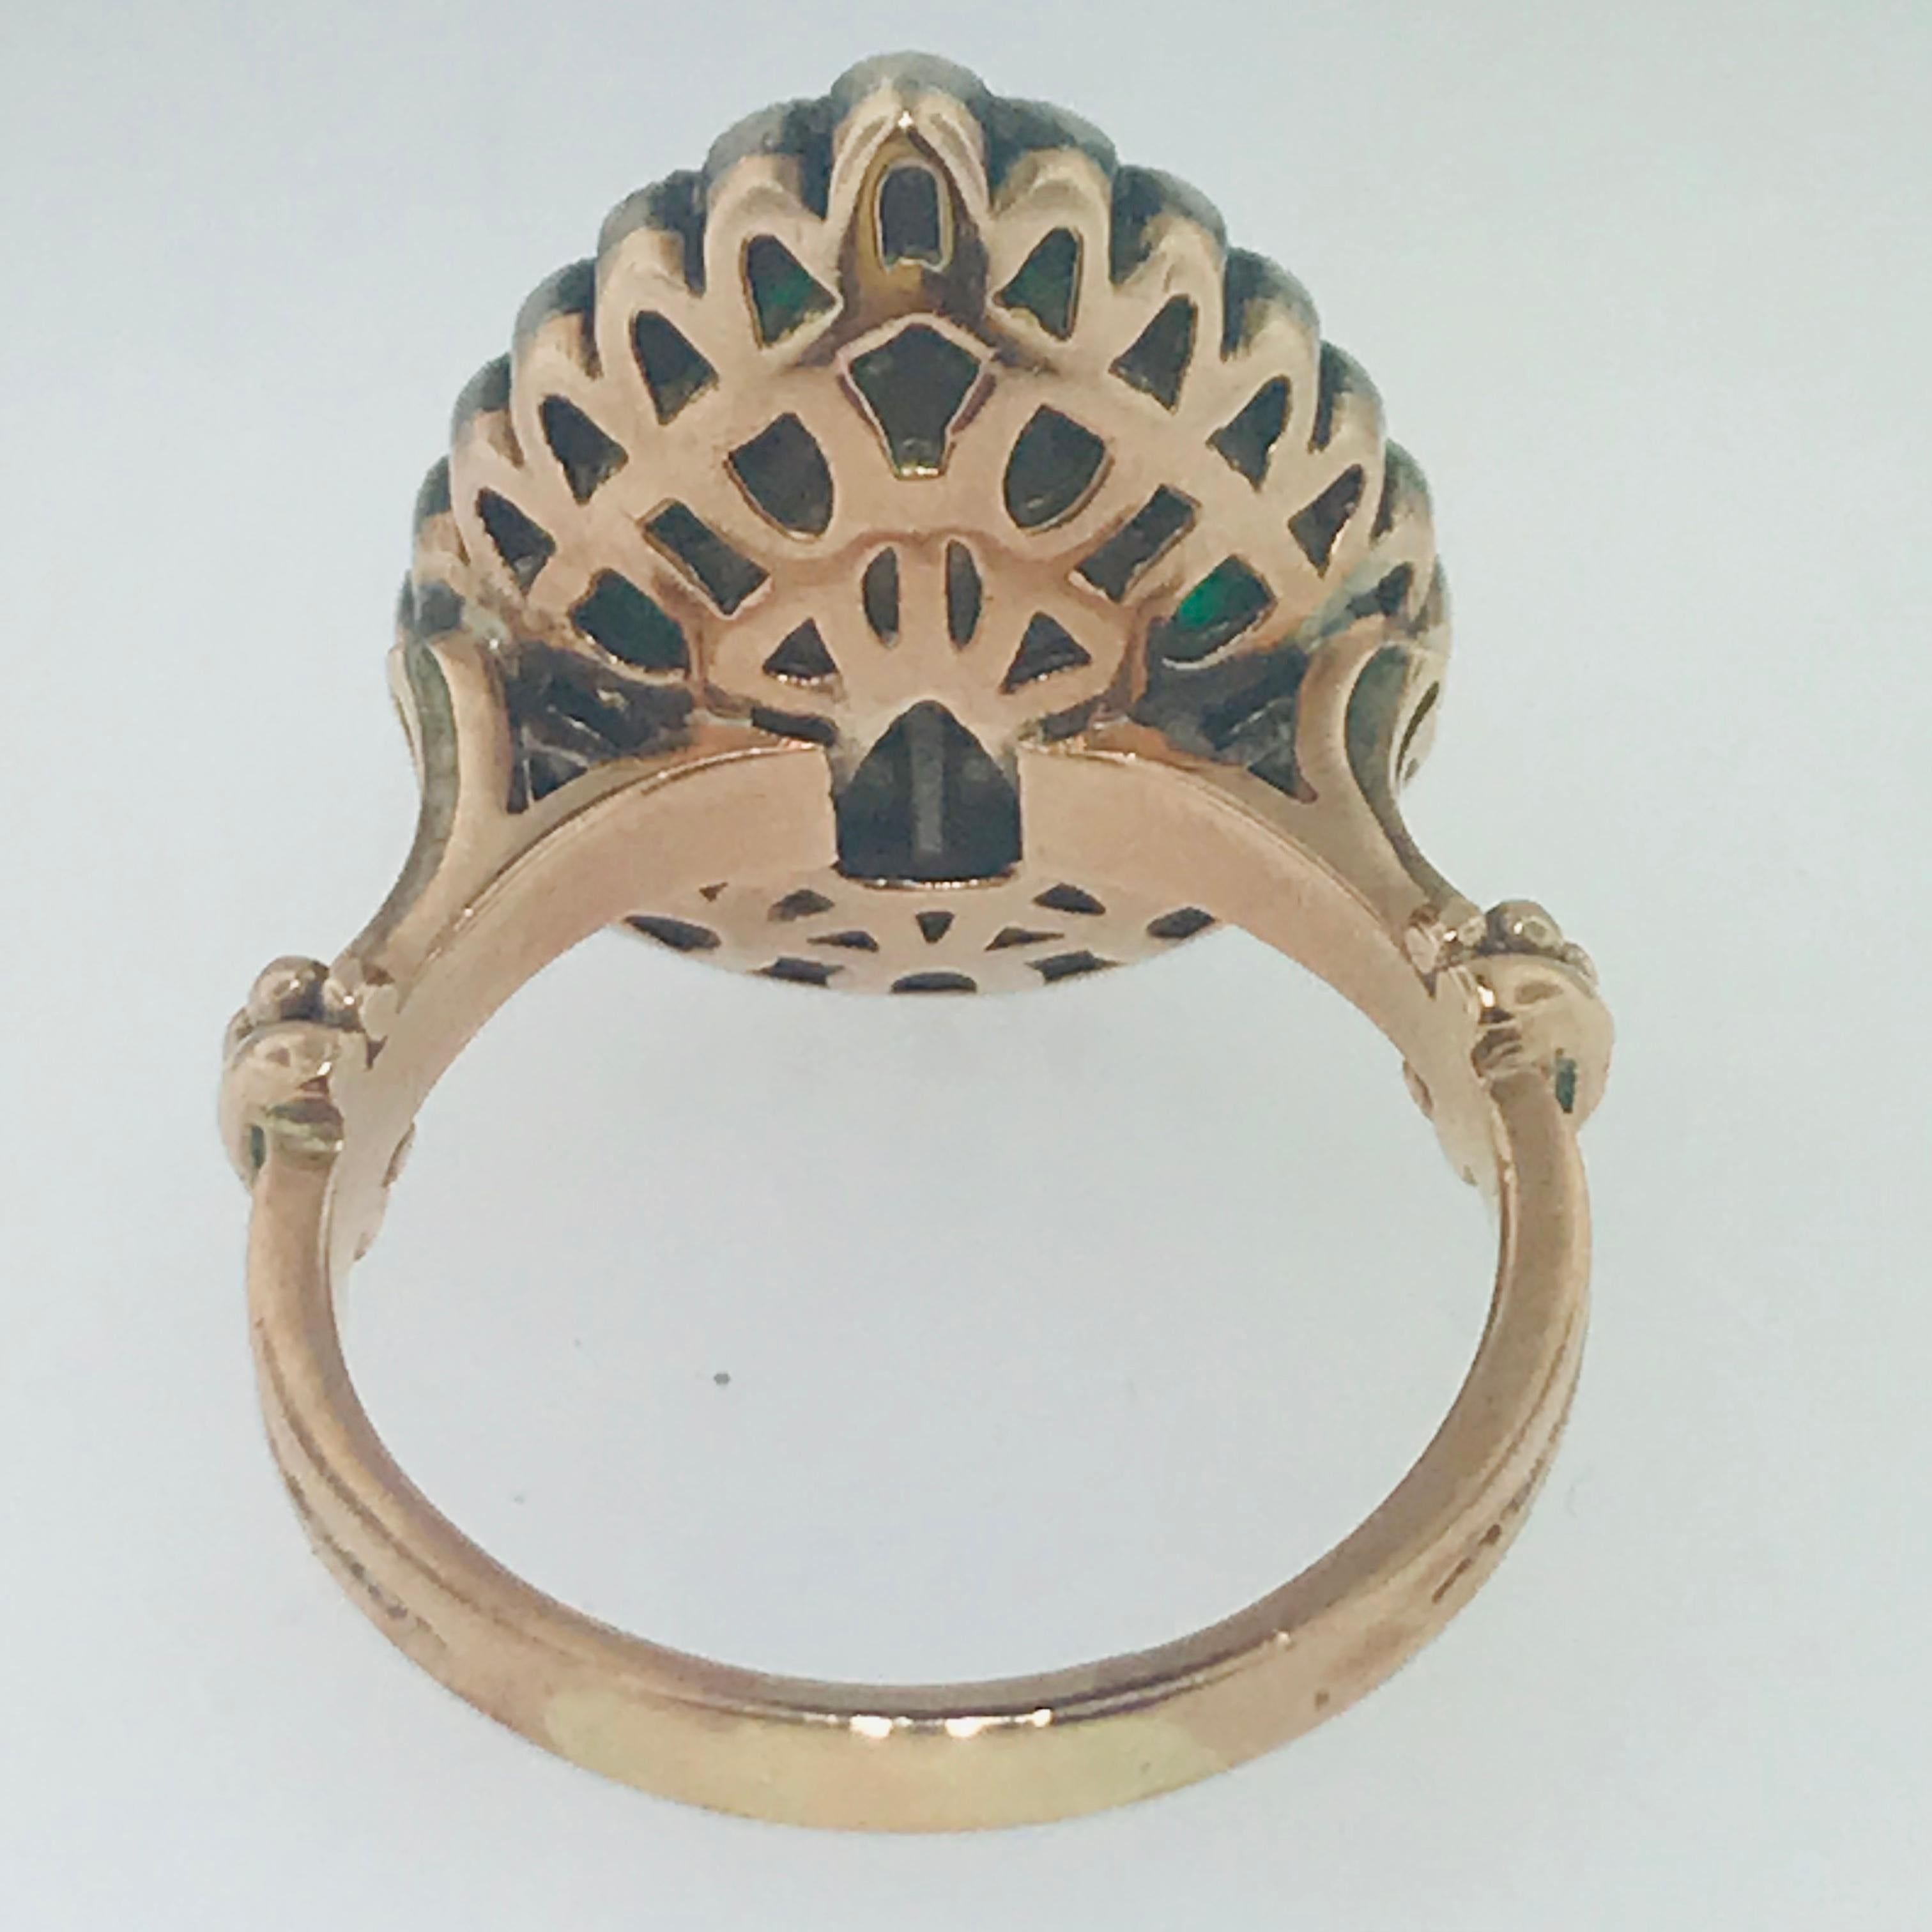 Round Cut 1 Carat Diamond and 1 Carat Emerald Estate Pear Shaped Ring, circa 18th Century